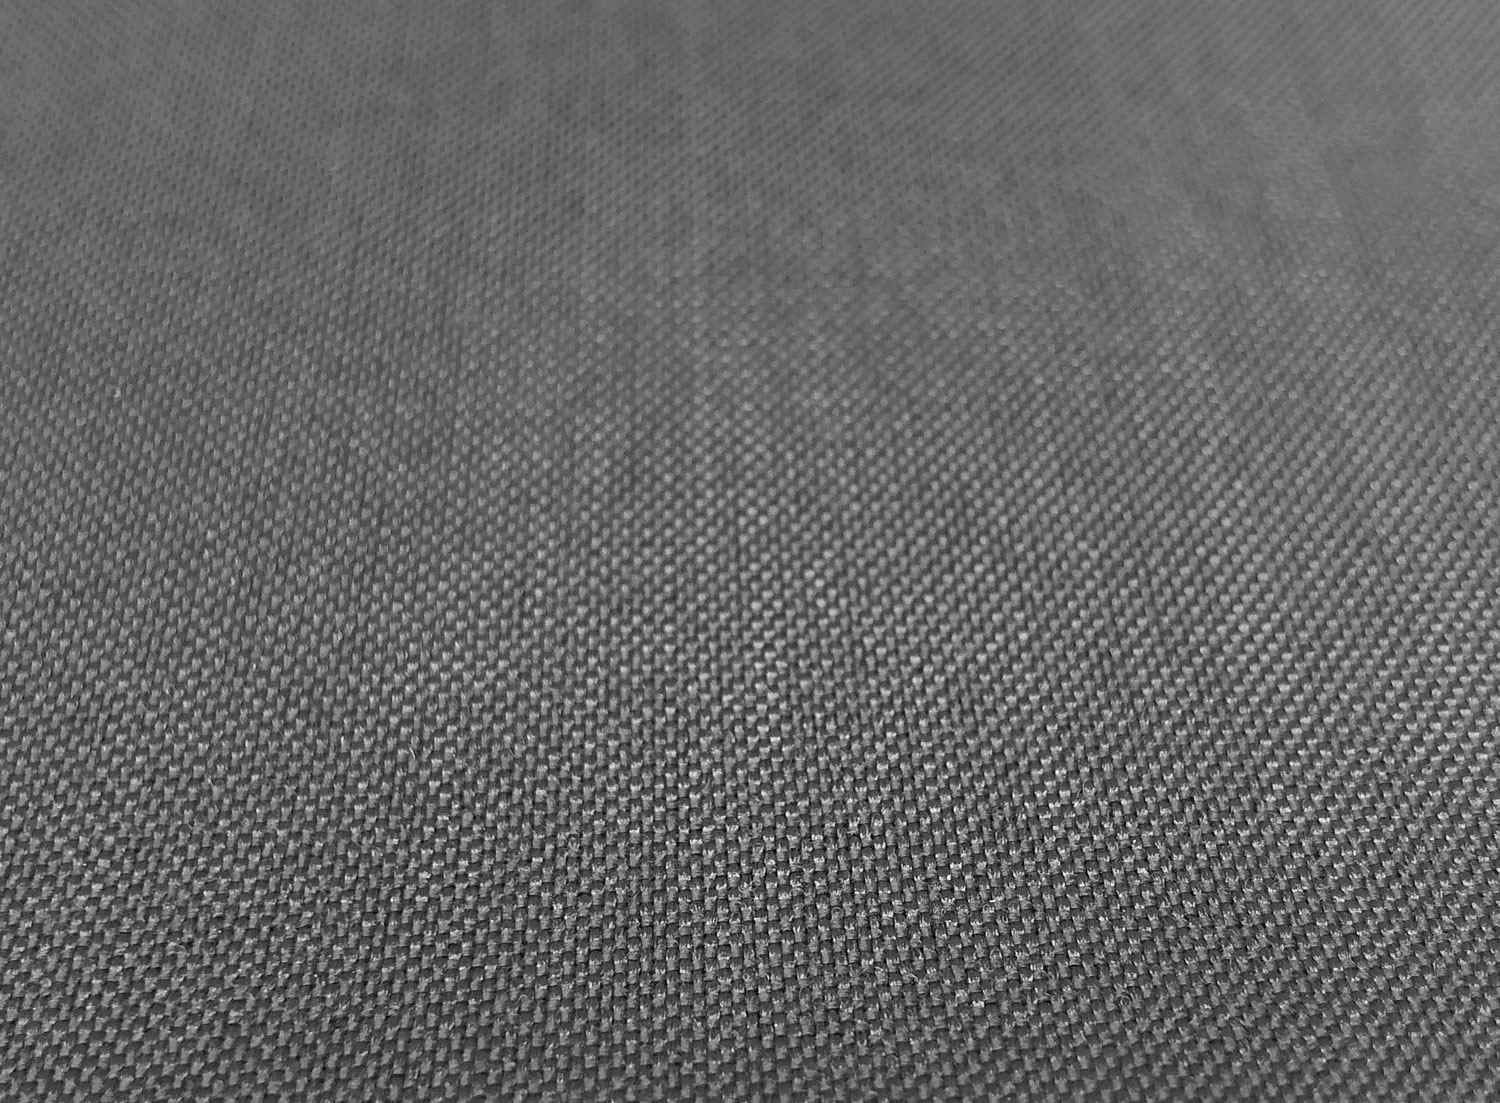 Nylon Cordura Fabric 500D - Gray